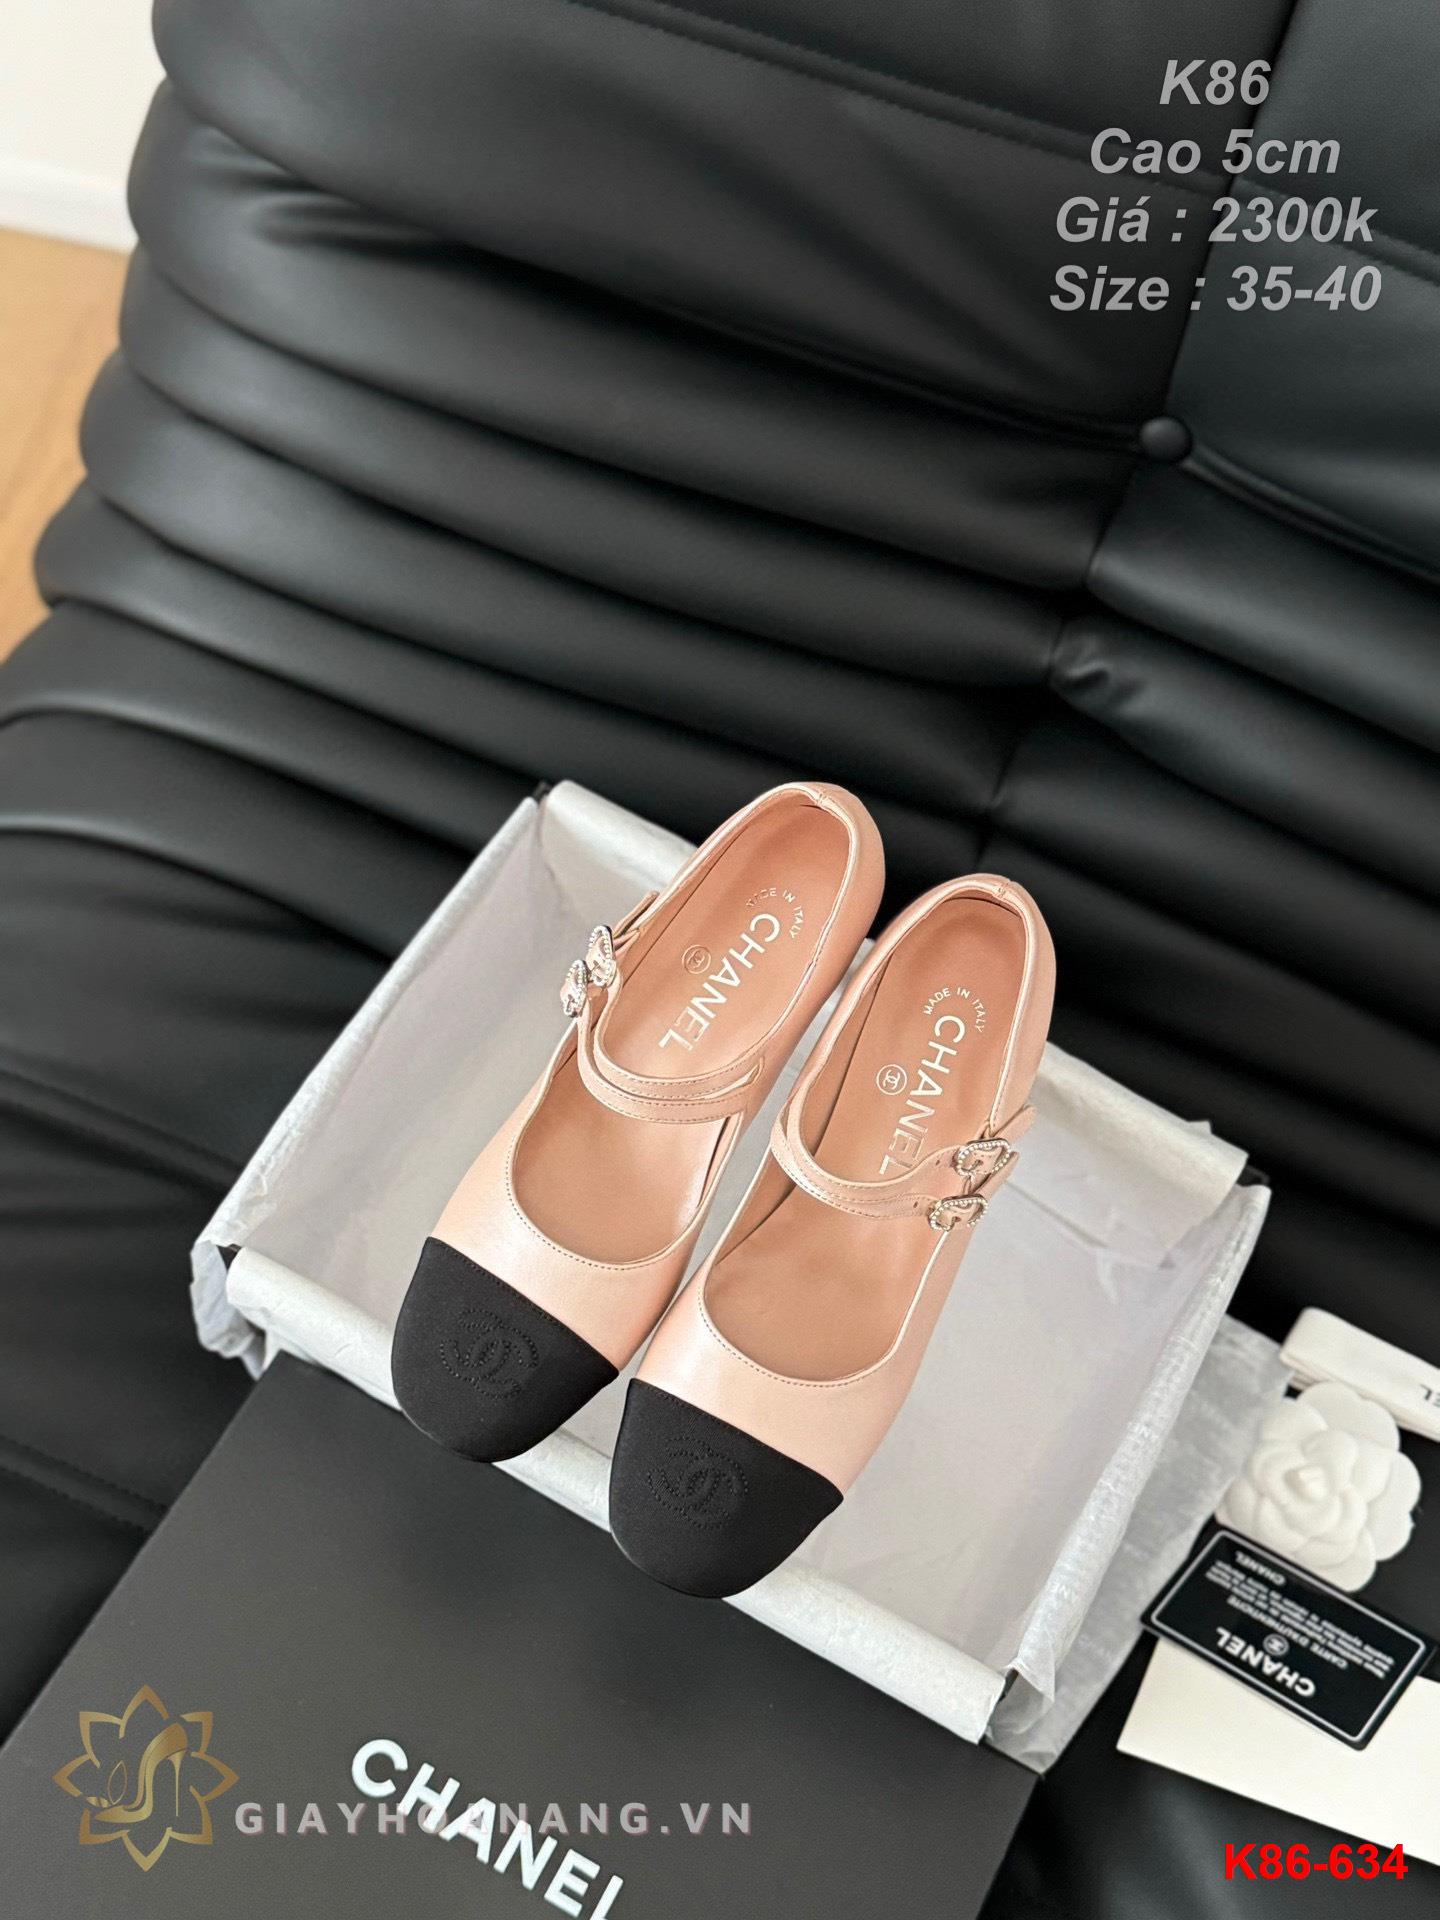 K86-634 Chanel giày cao gót 5cm siêu cấp